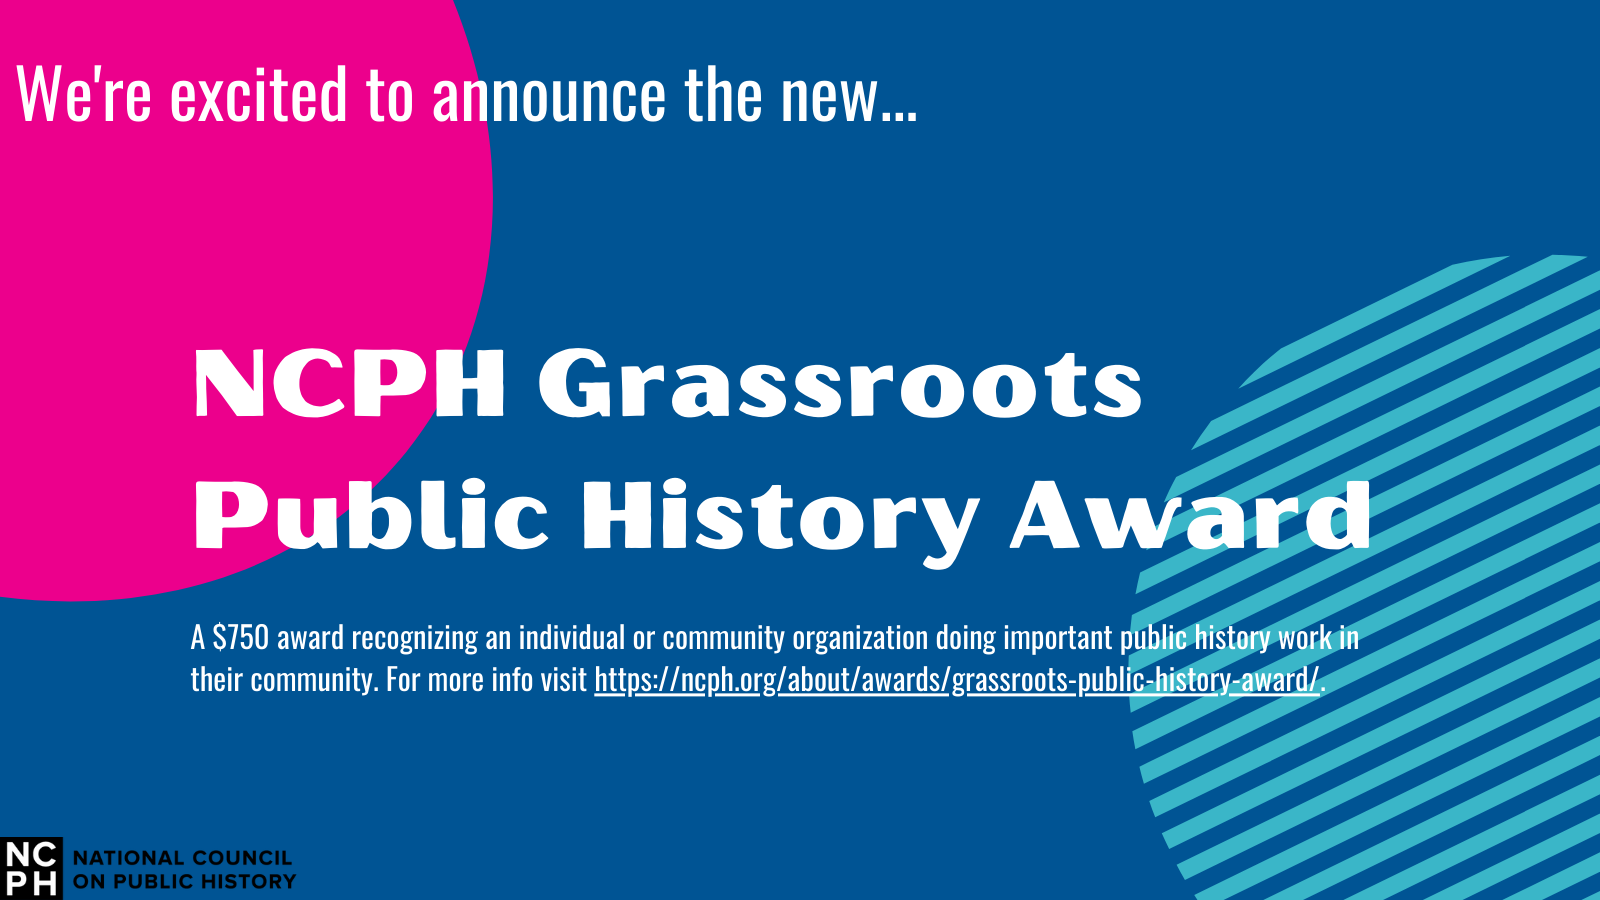 New Grassroots Public History Award National Council on Public History